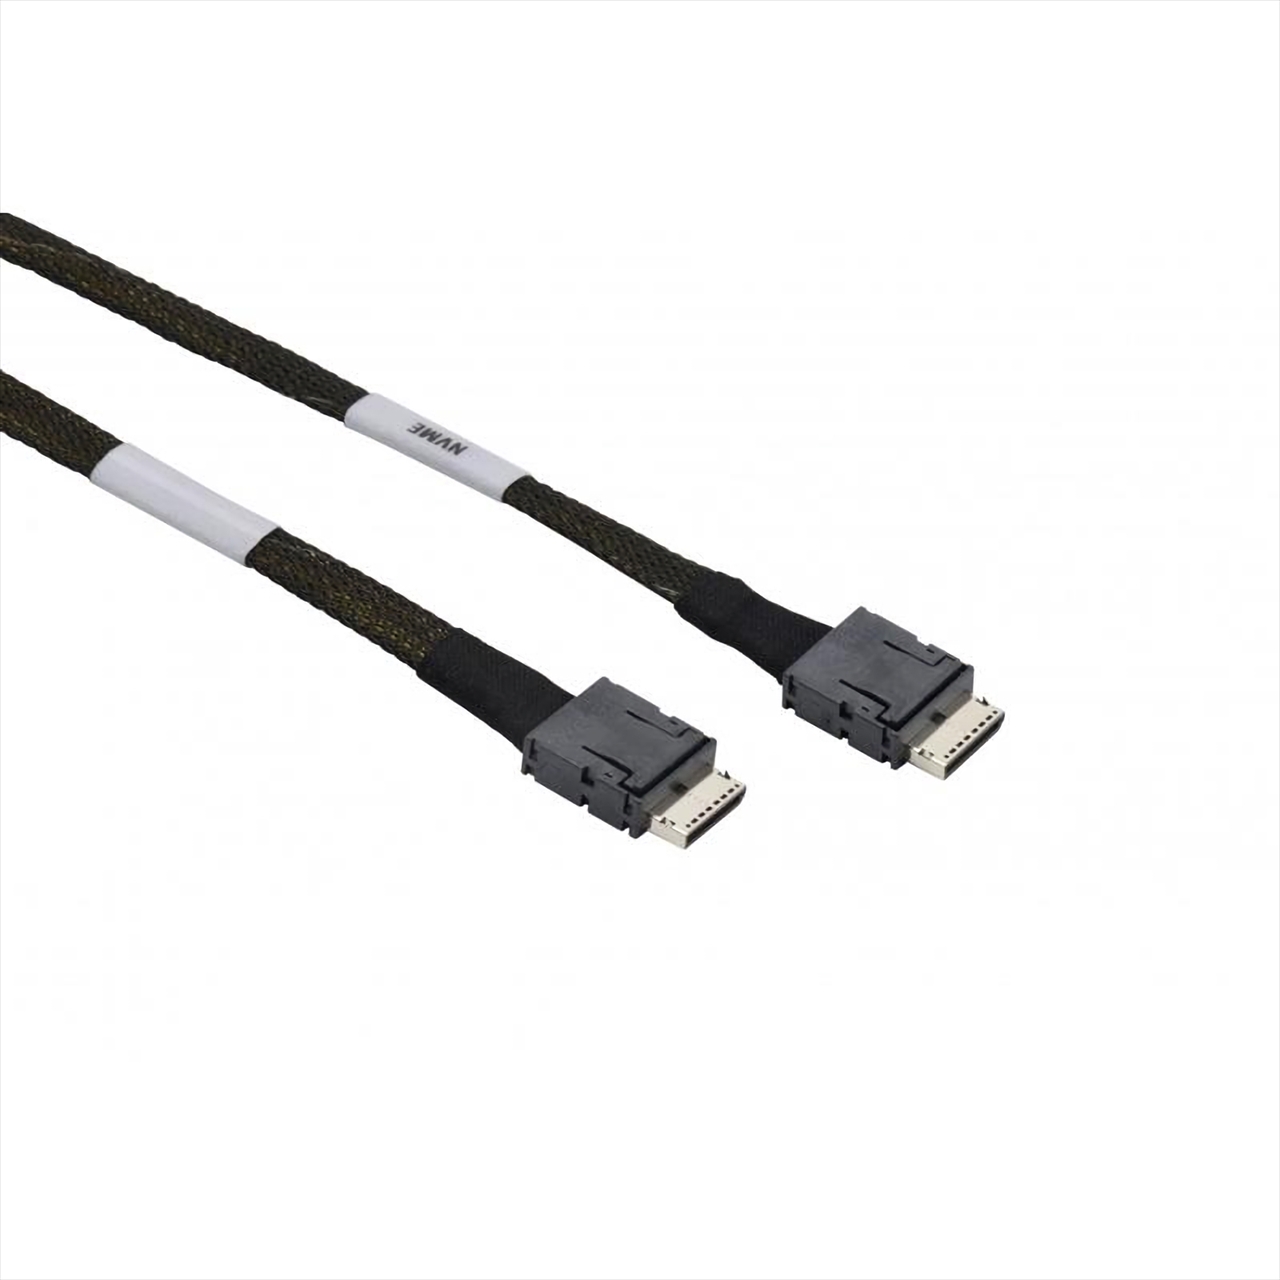 Supermicro CBL-SAST-0933 50cm OCuLink SFF-8611 (x4) to 4 SATA Cable